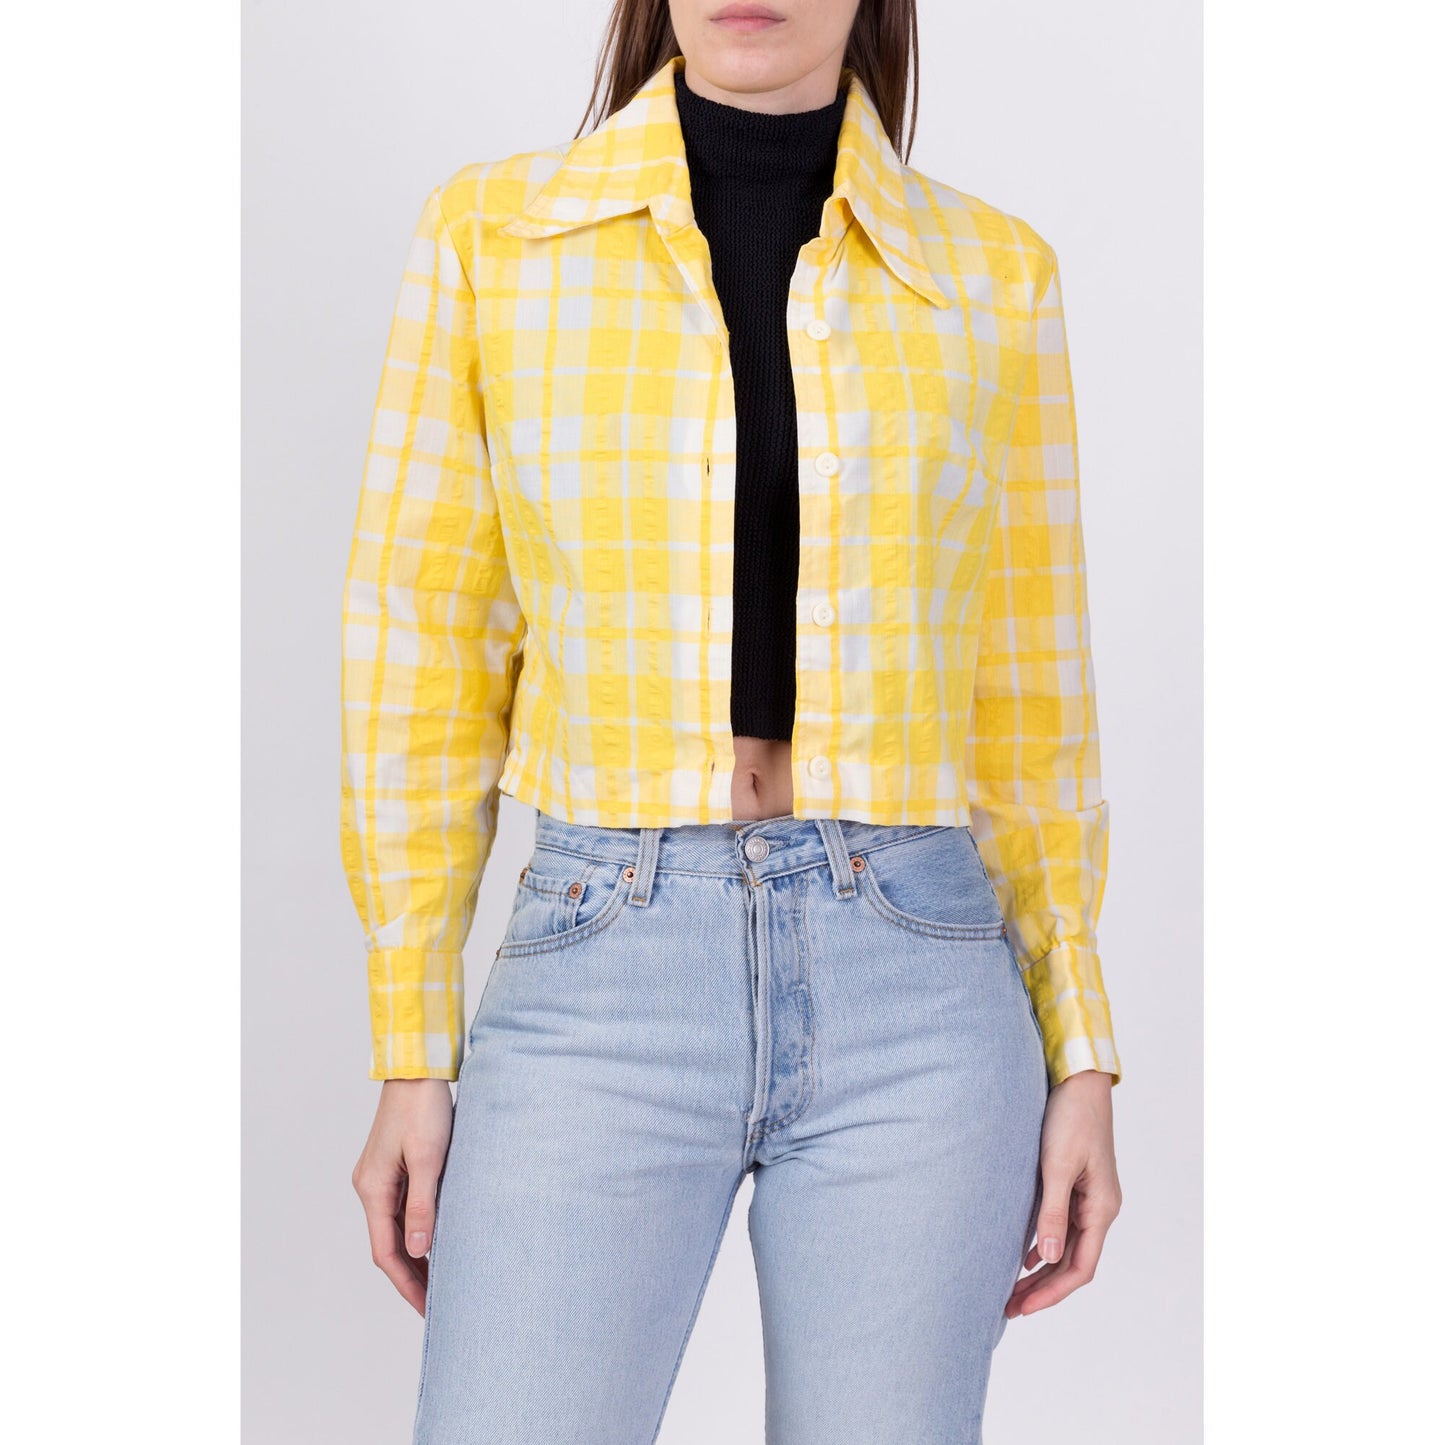 70s Yellow & White Seersucker Plaid Cropped Jacket - Medium